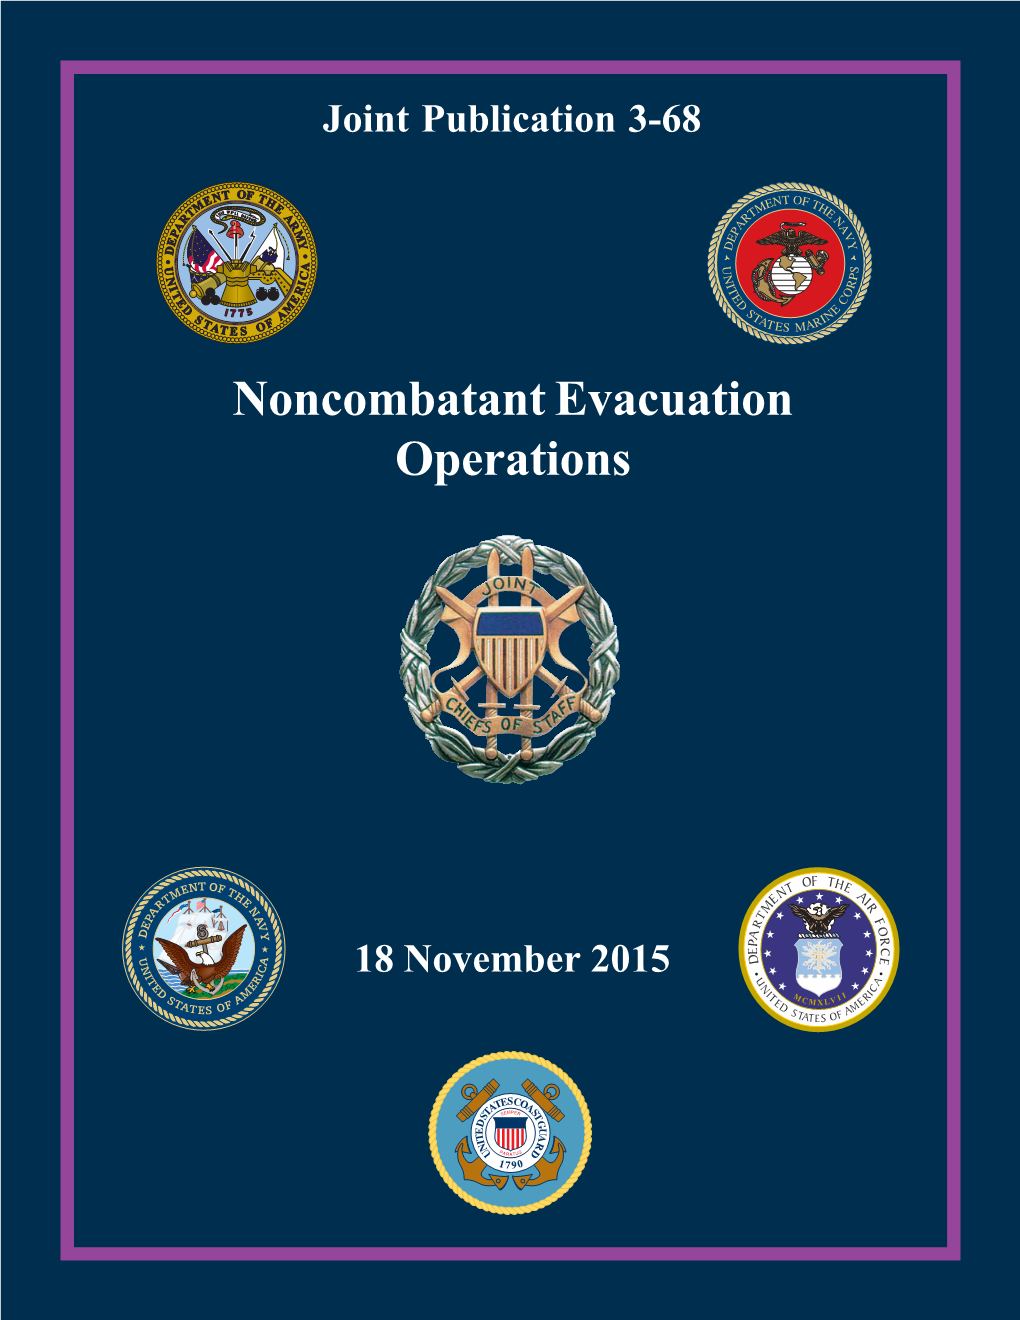 JP 3-68, Noncombatant Evacuation Operations, 23 December 2010